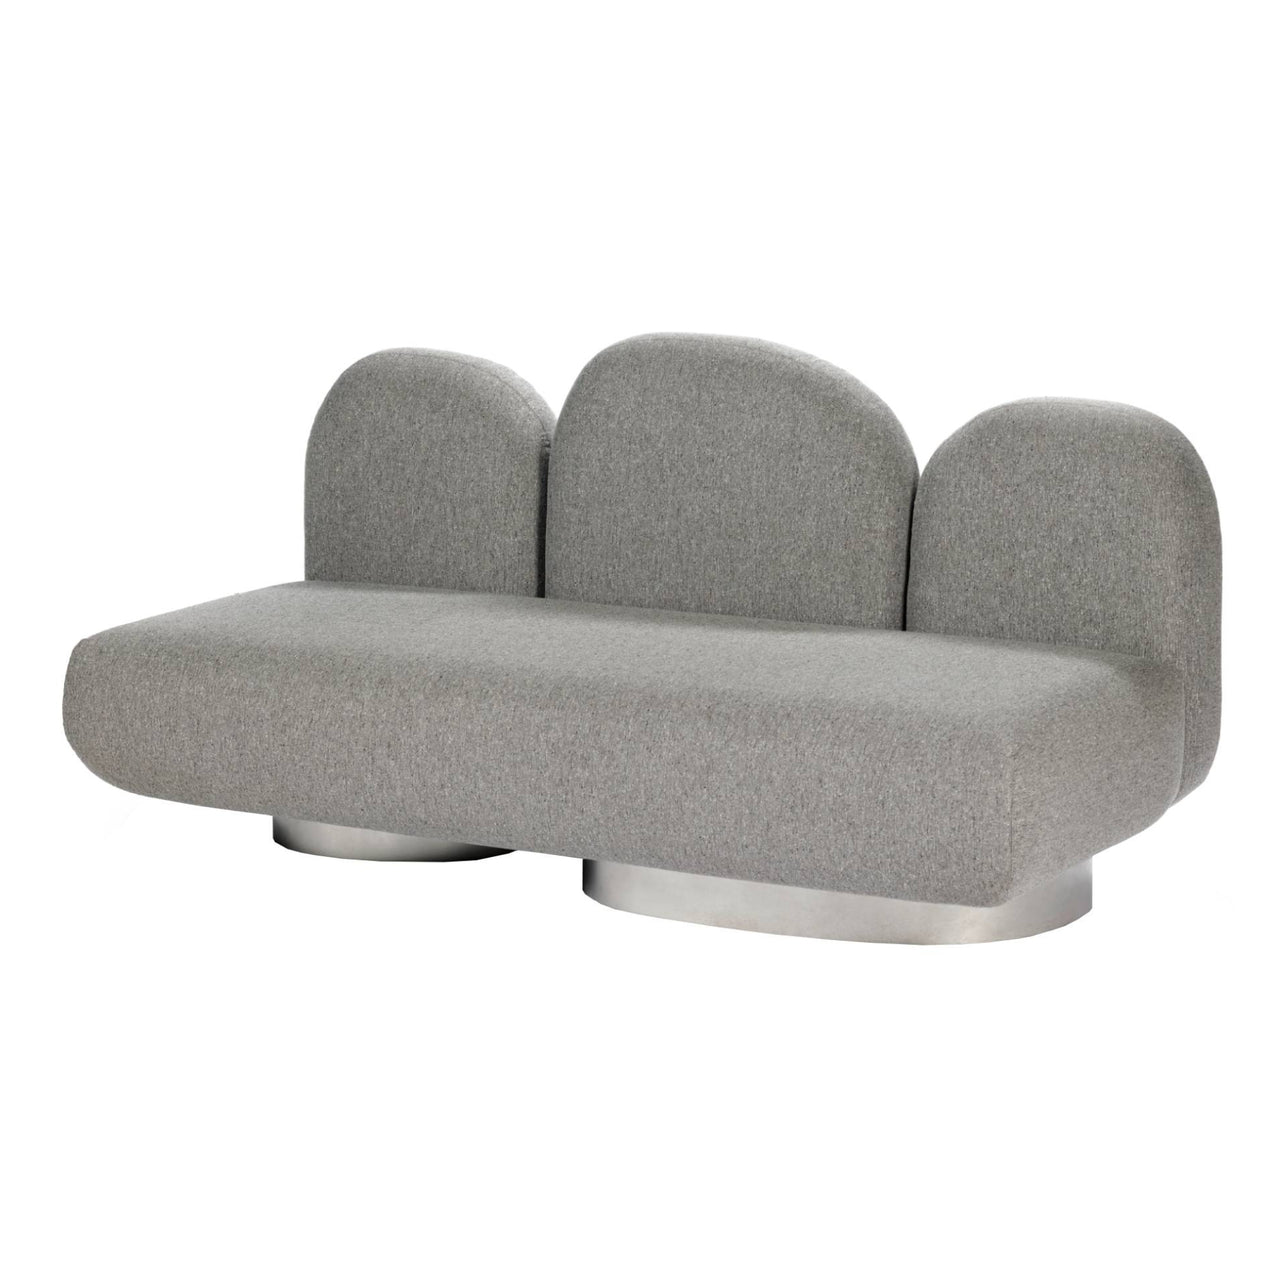 Assemble 2 Seat Sofa: Sevo Grey + Without Armrest